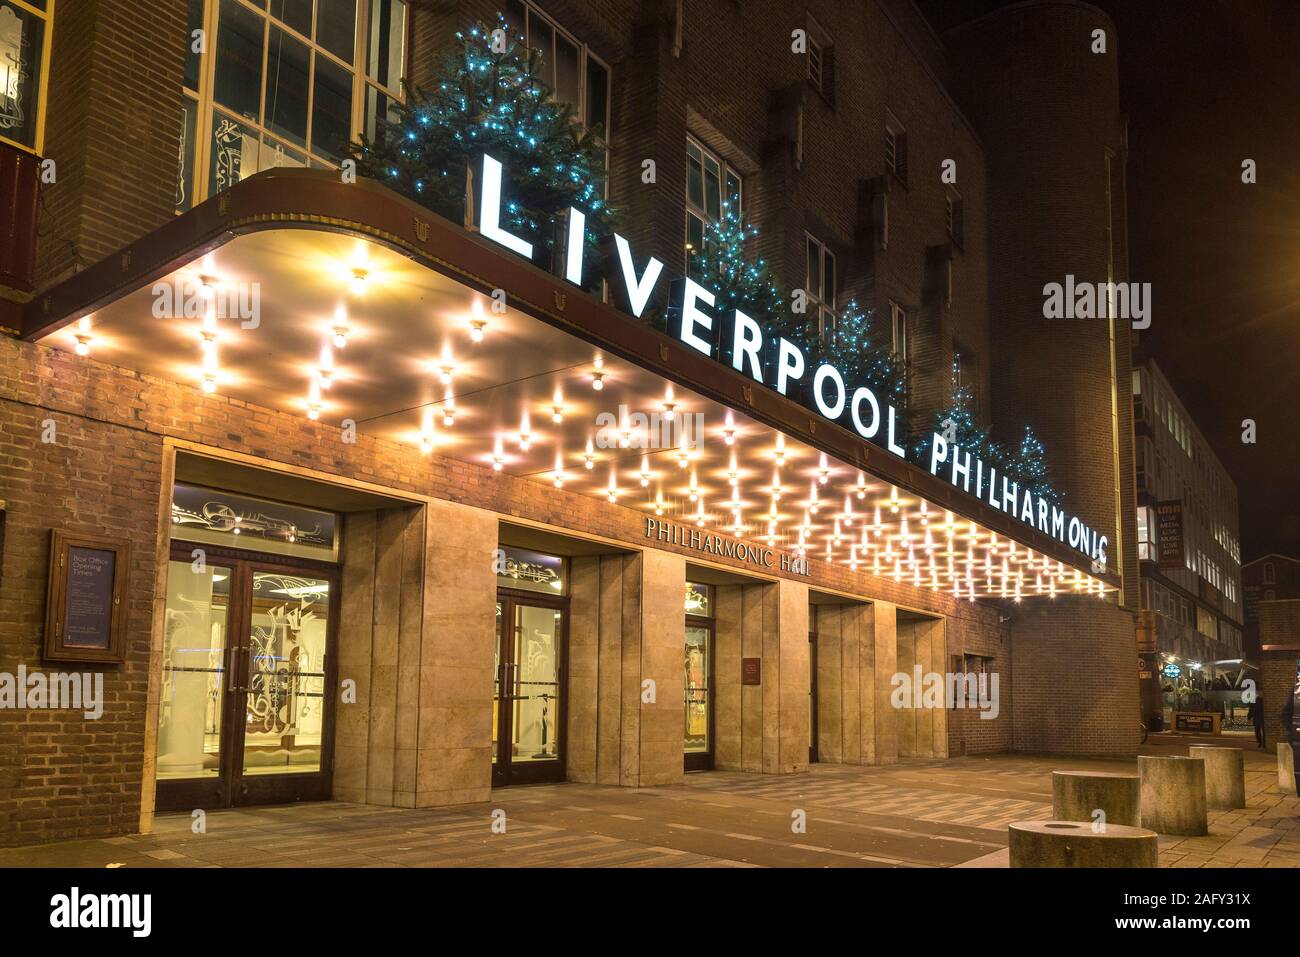 Liverpool Philharmonic Hall on Hope Street at night. Stock Photo